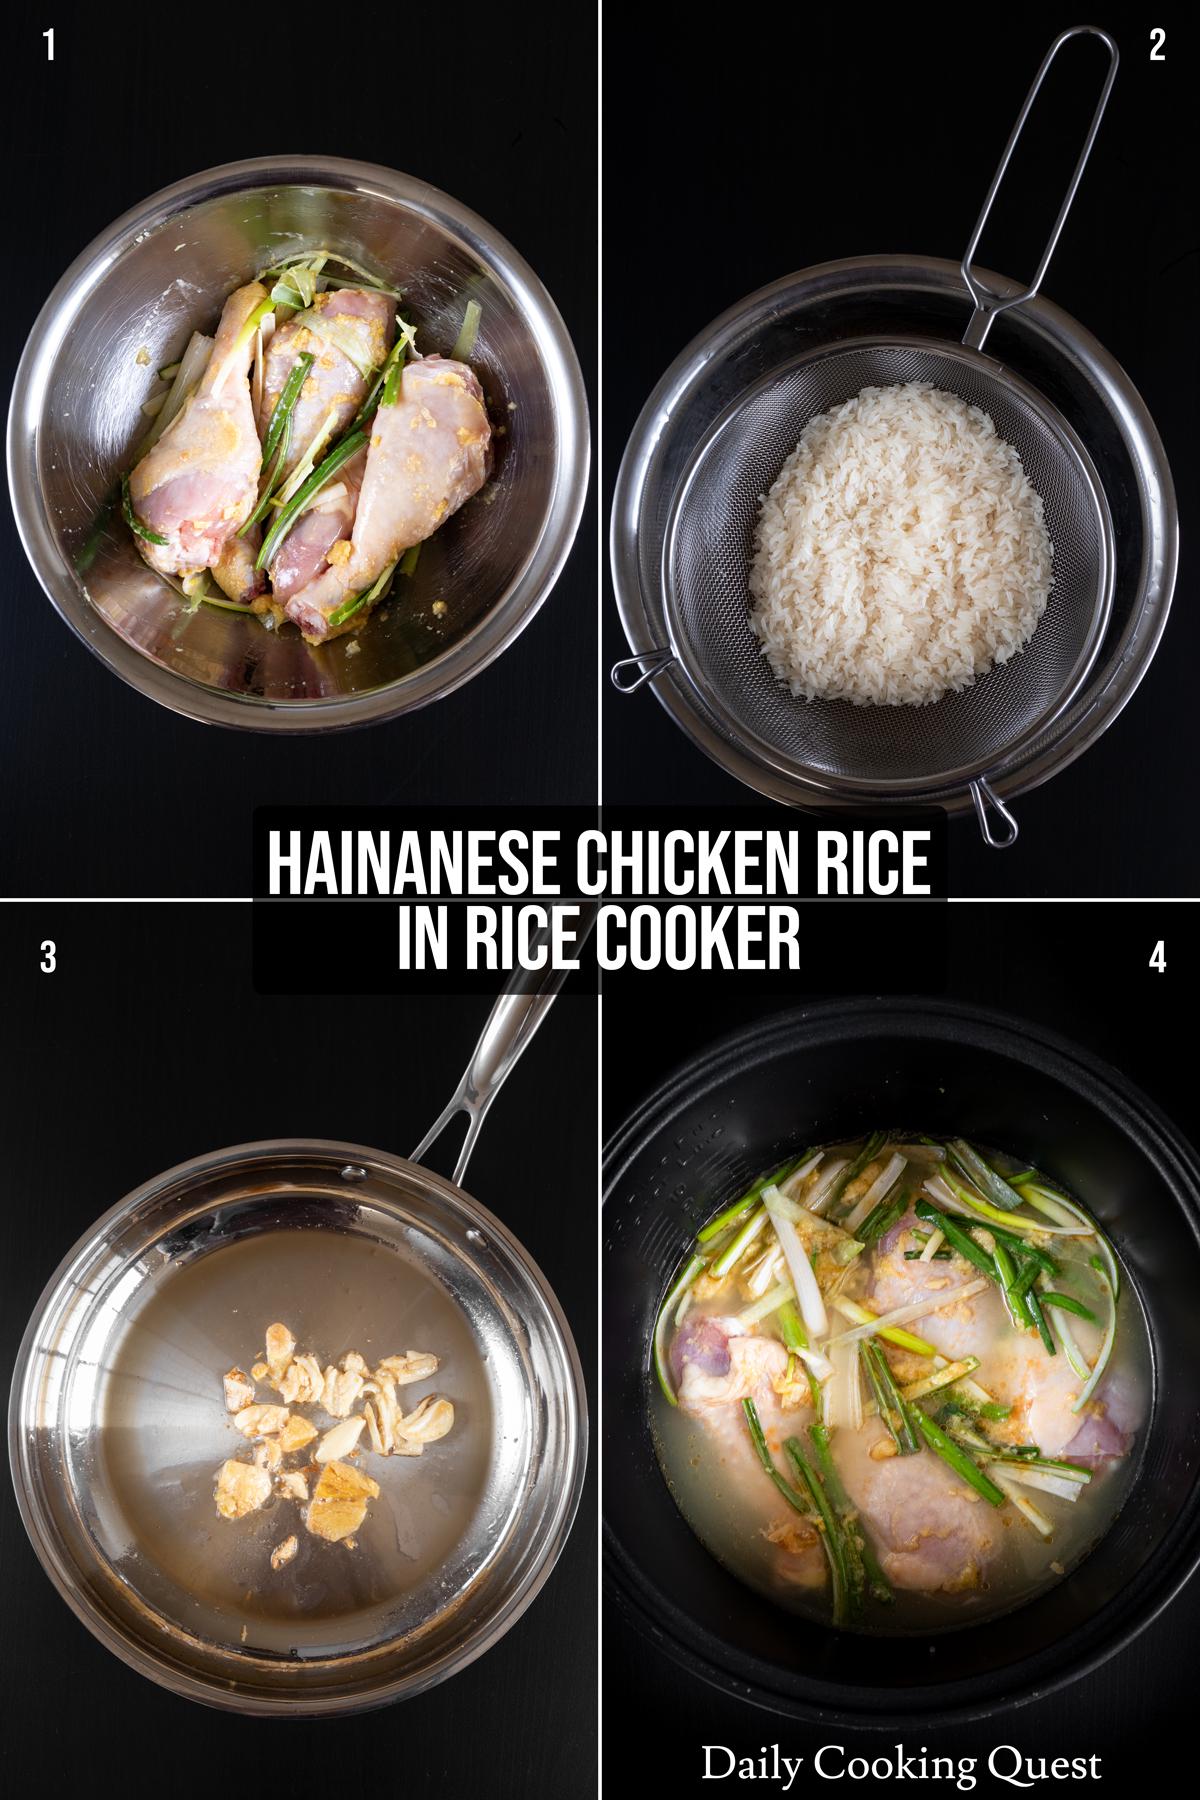 Rice cooker Hainanese chicken rice recipe